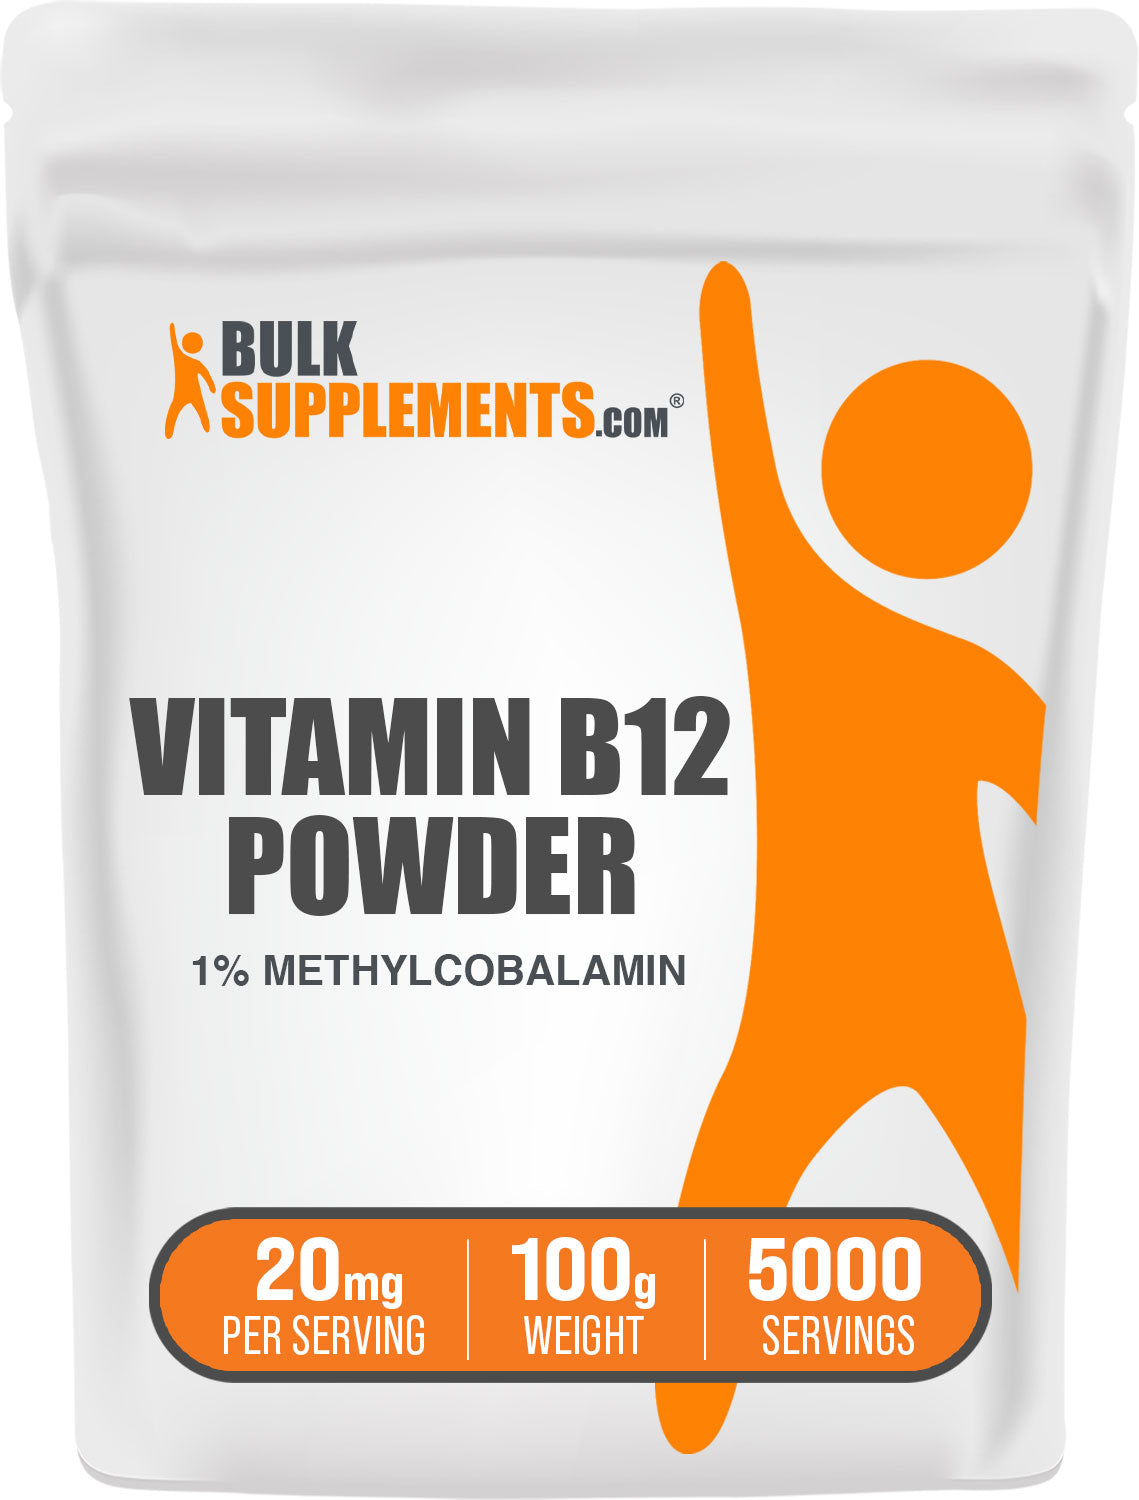 BulkSupplements Vitamin B12 Powder 1% Methylcobalamin 100g bag